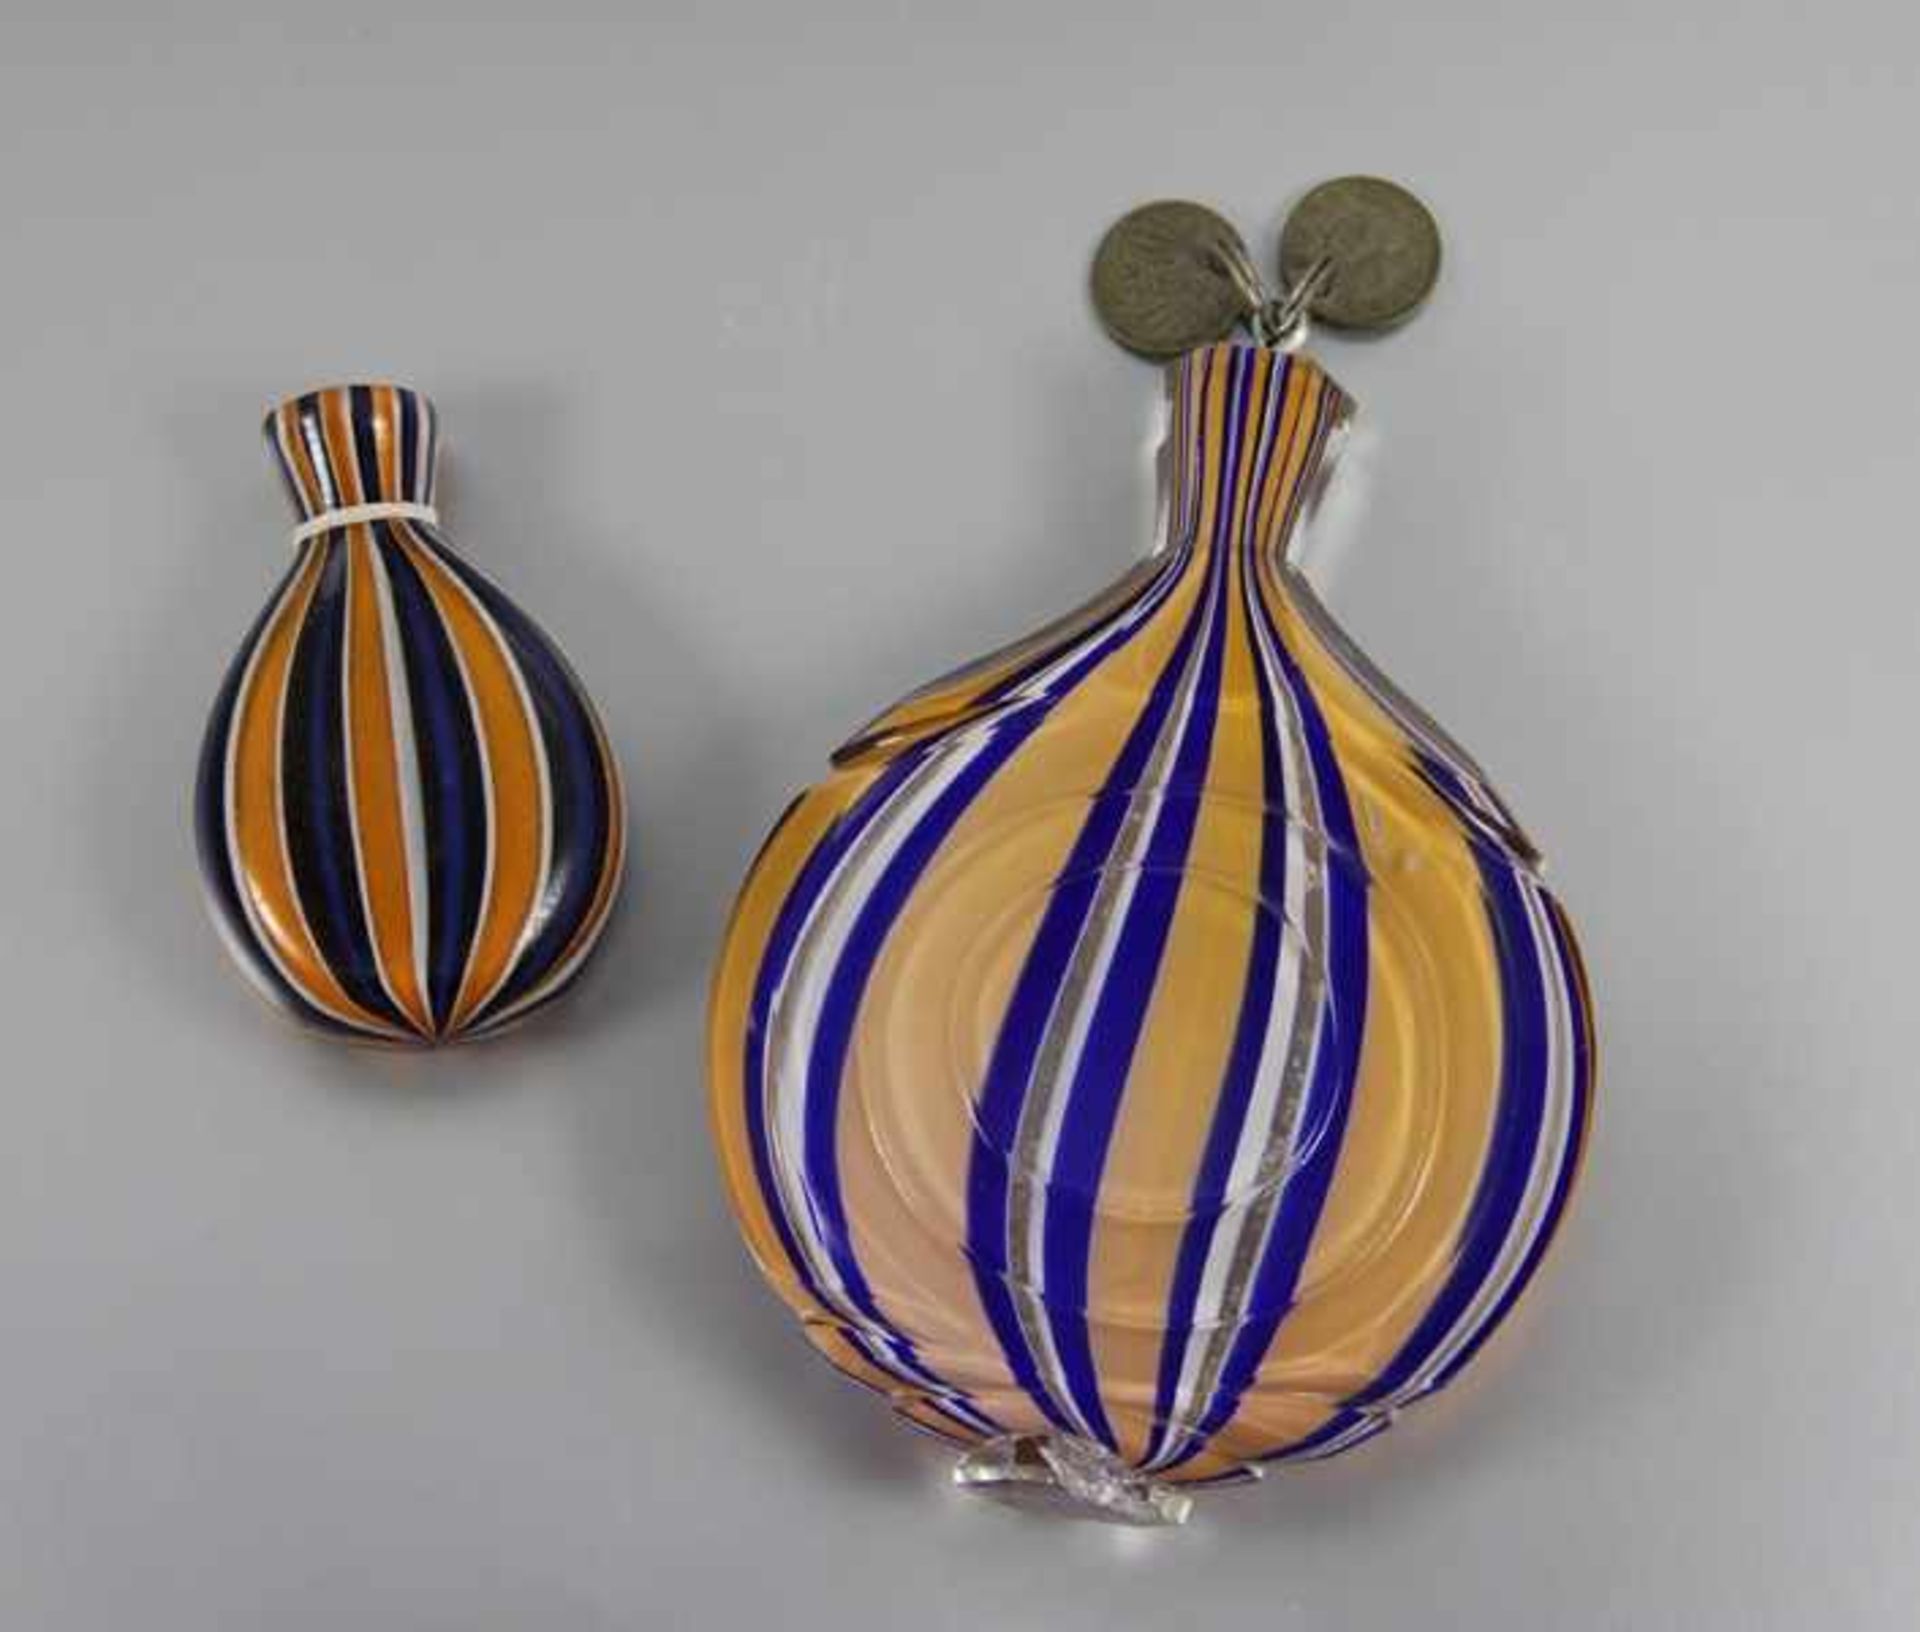 Konvolut Schnupftabakgläserum 1900, Glas, 2 Schnupftabakgläser mit verschiedenfarbigem Faden- bzw.